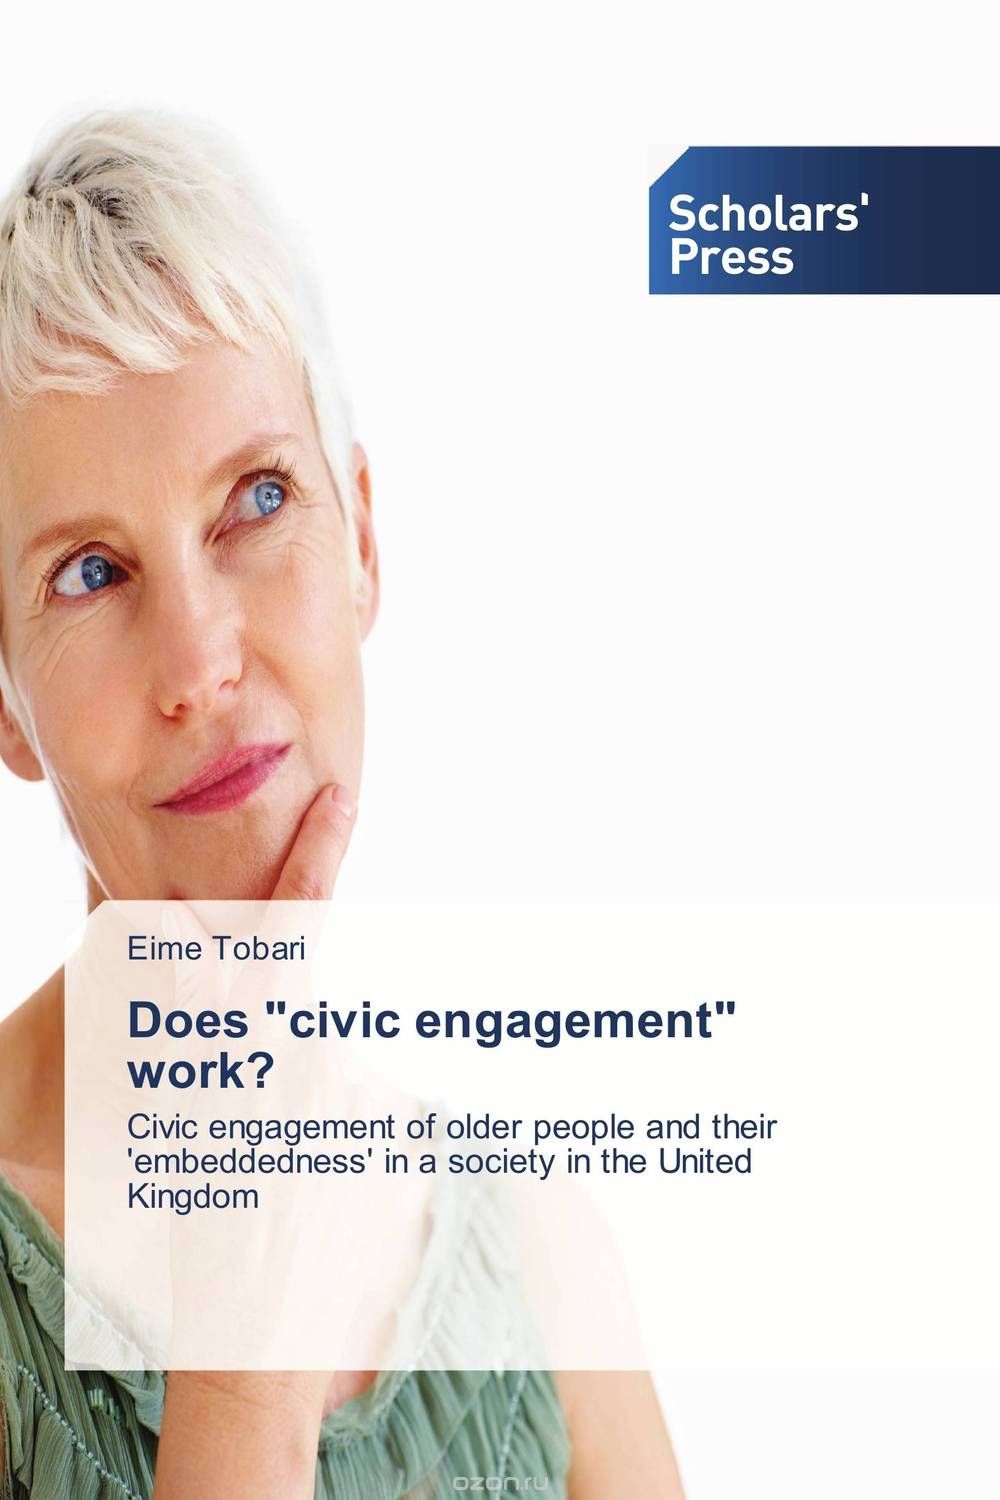 Скачать книгу "Does "civic engagement" work?"